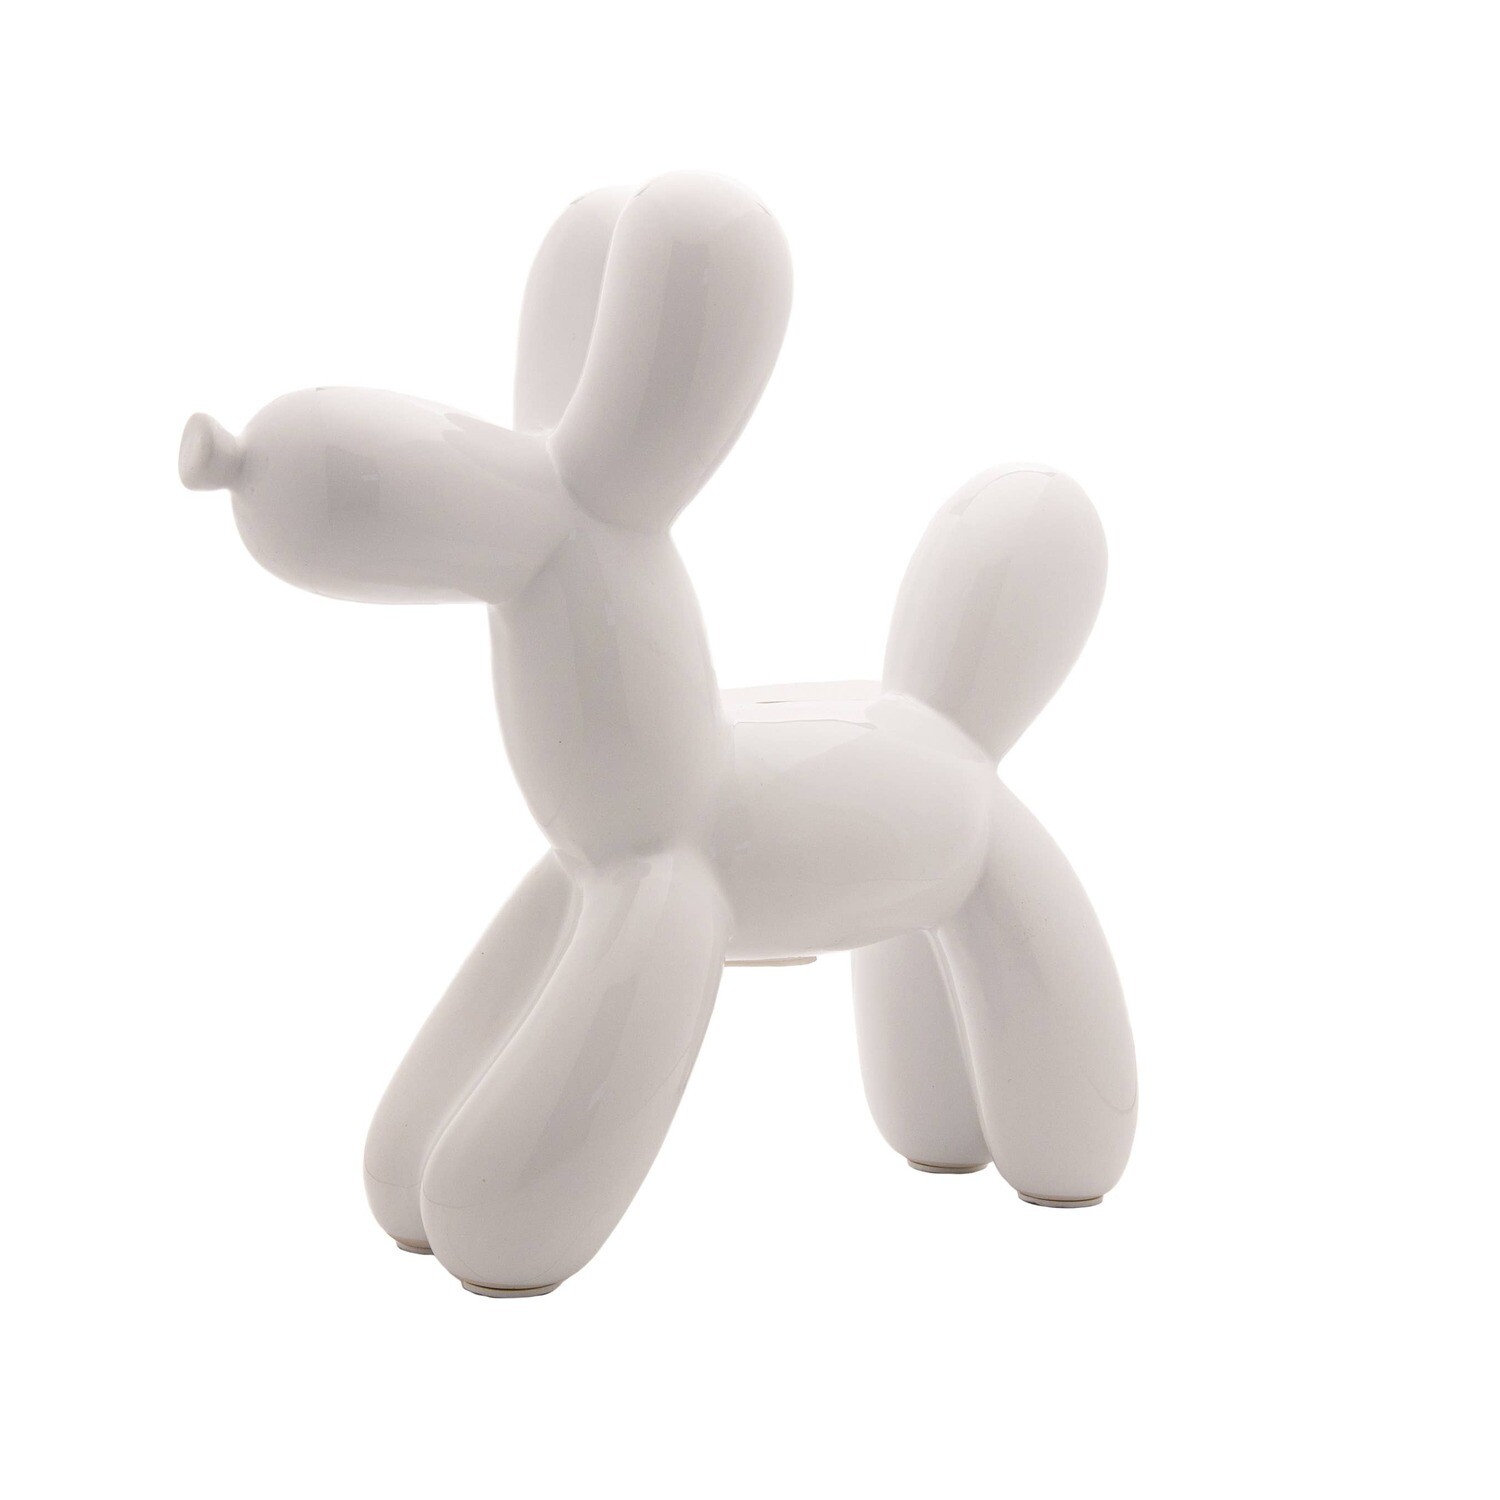 White Balloon Dog Bank - 12" tall